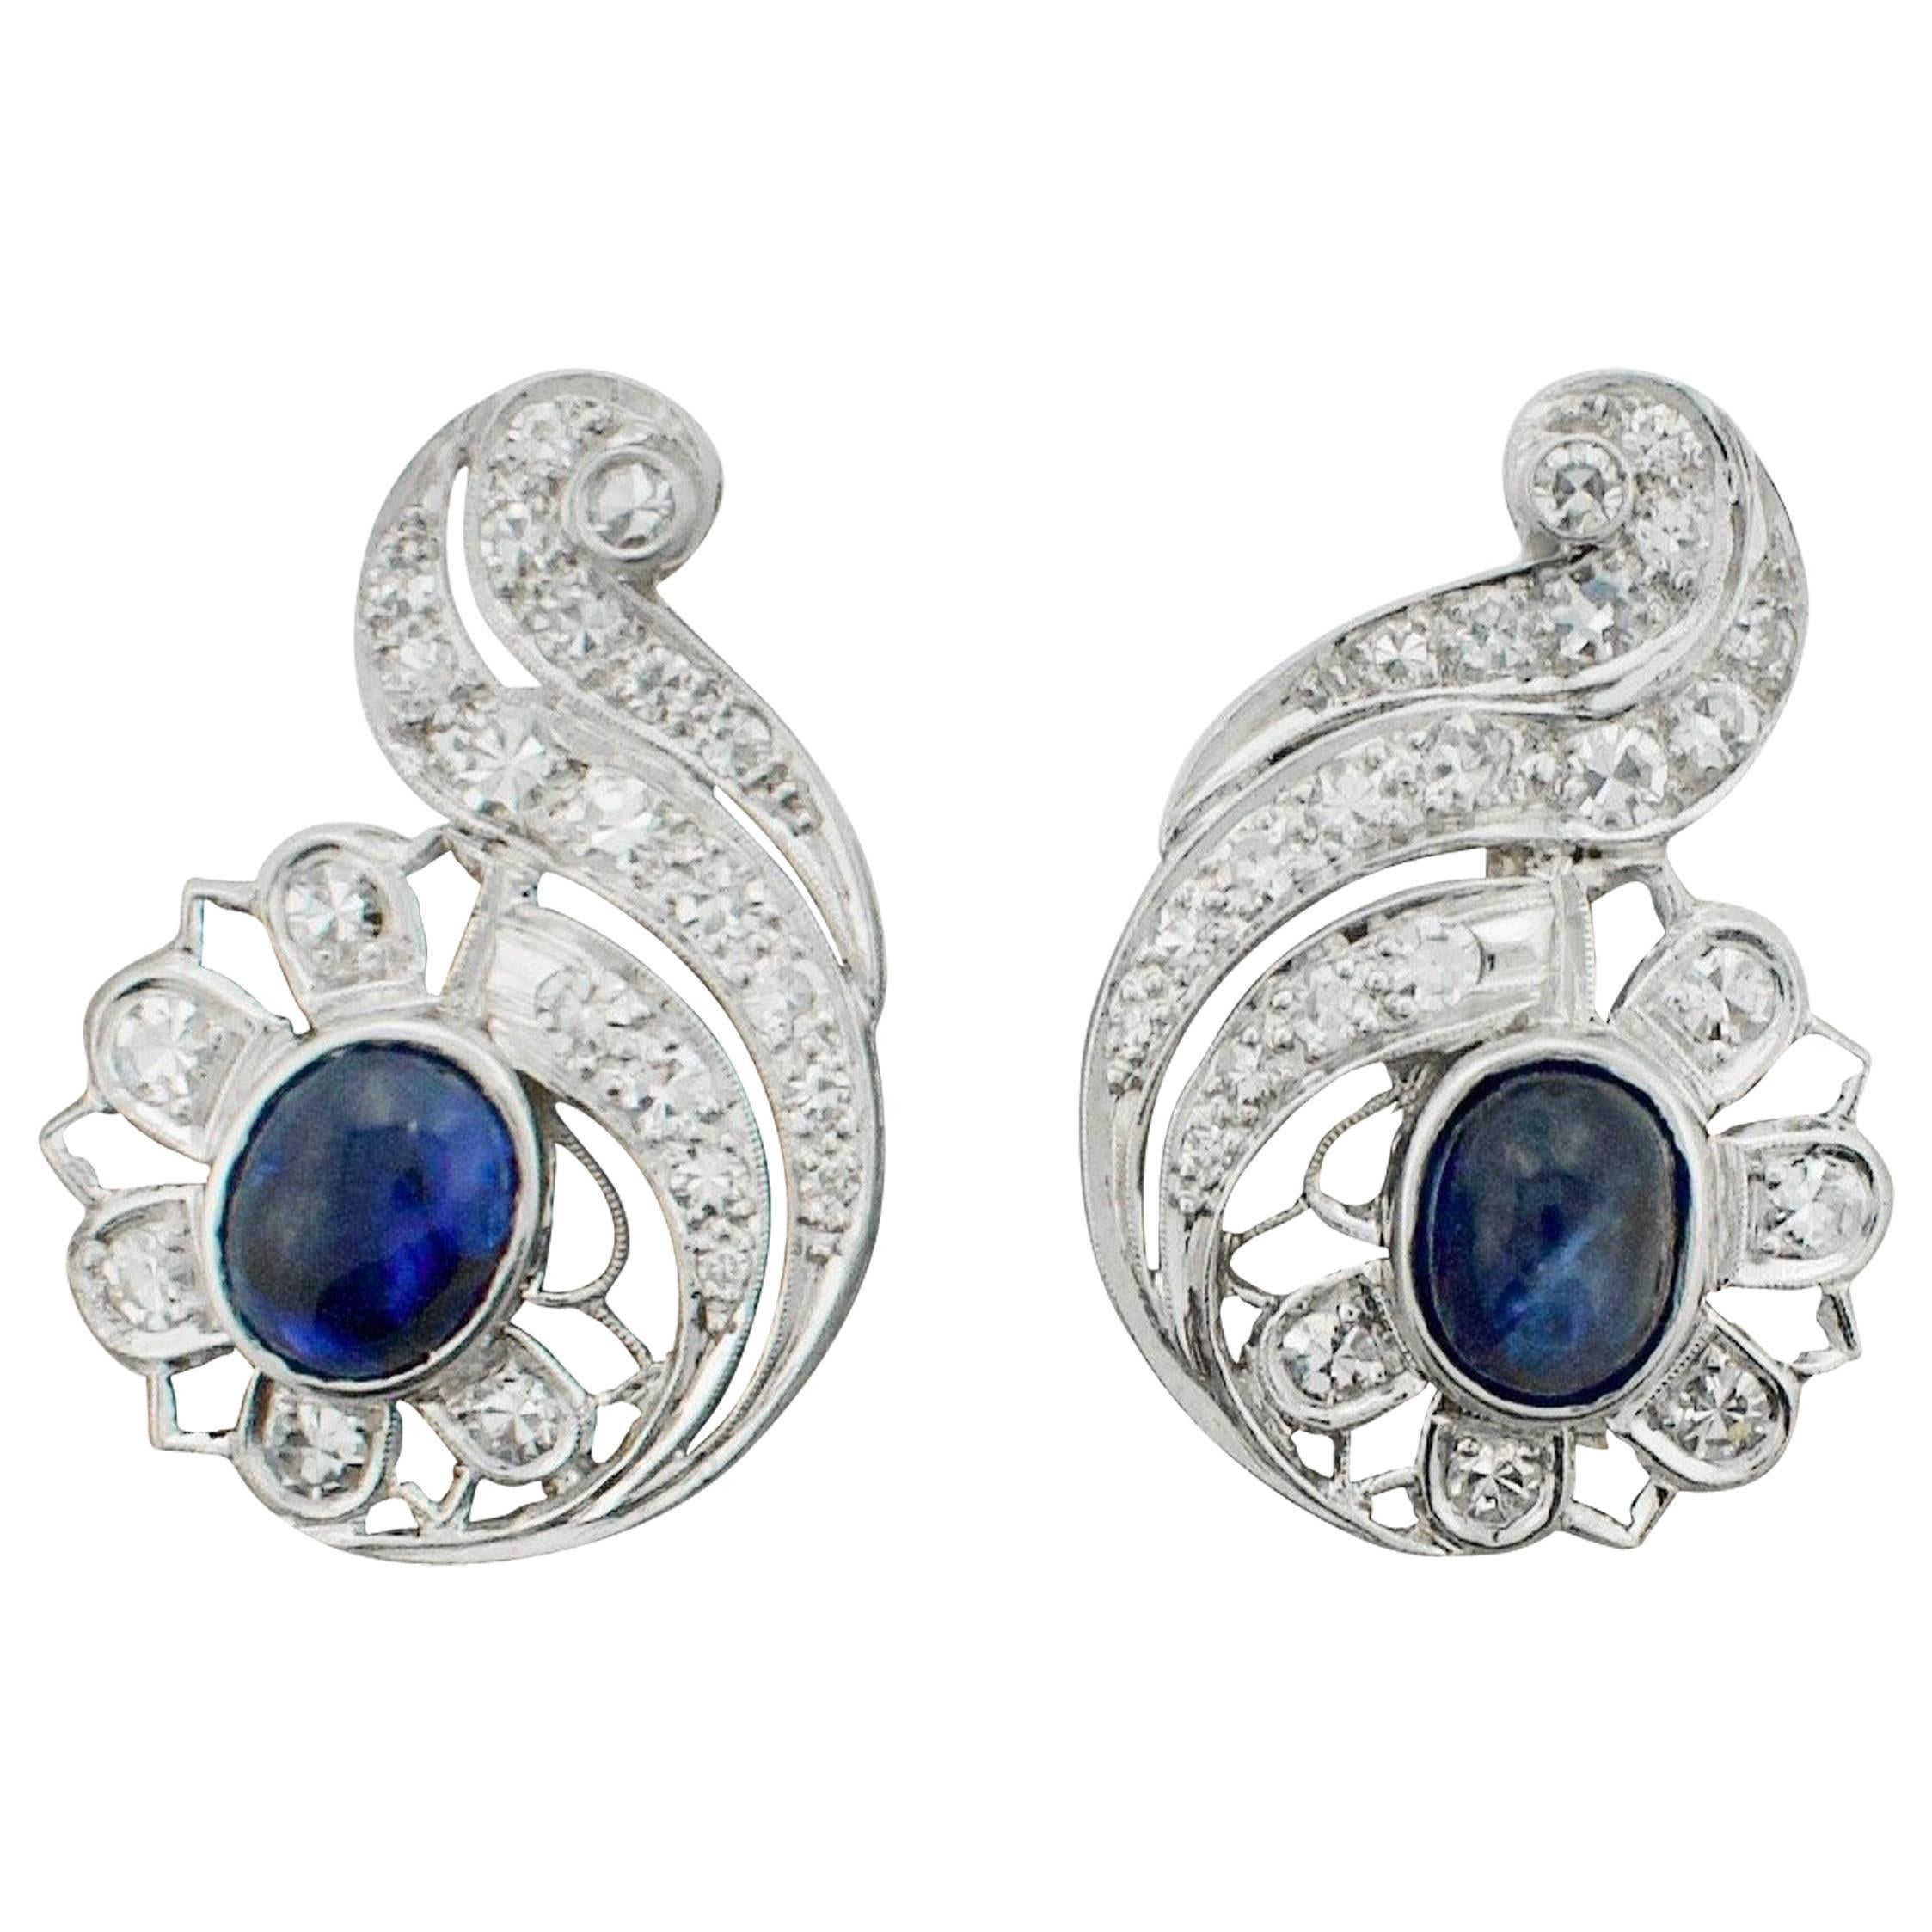 1940s Sapphire and Diamond Earrings